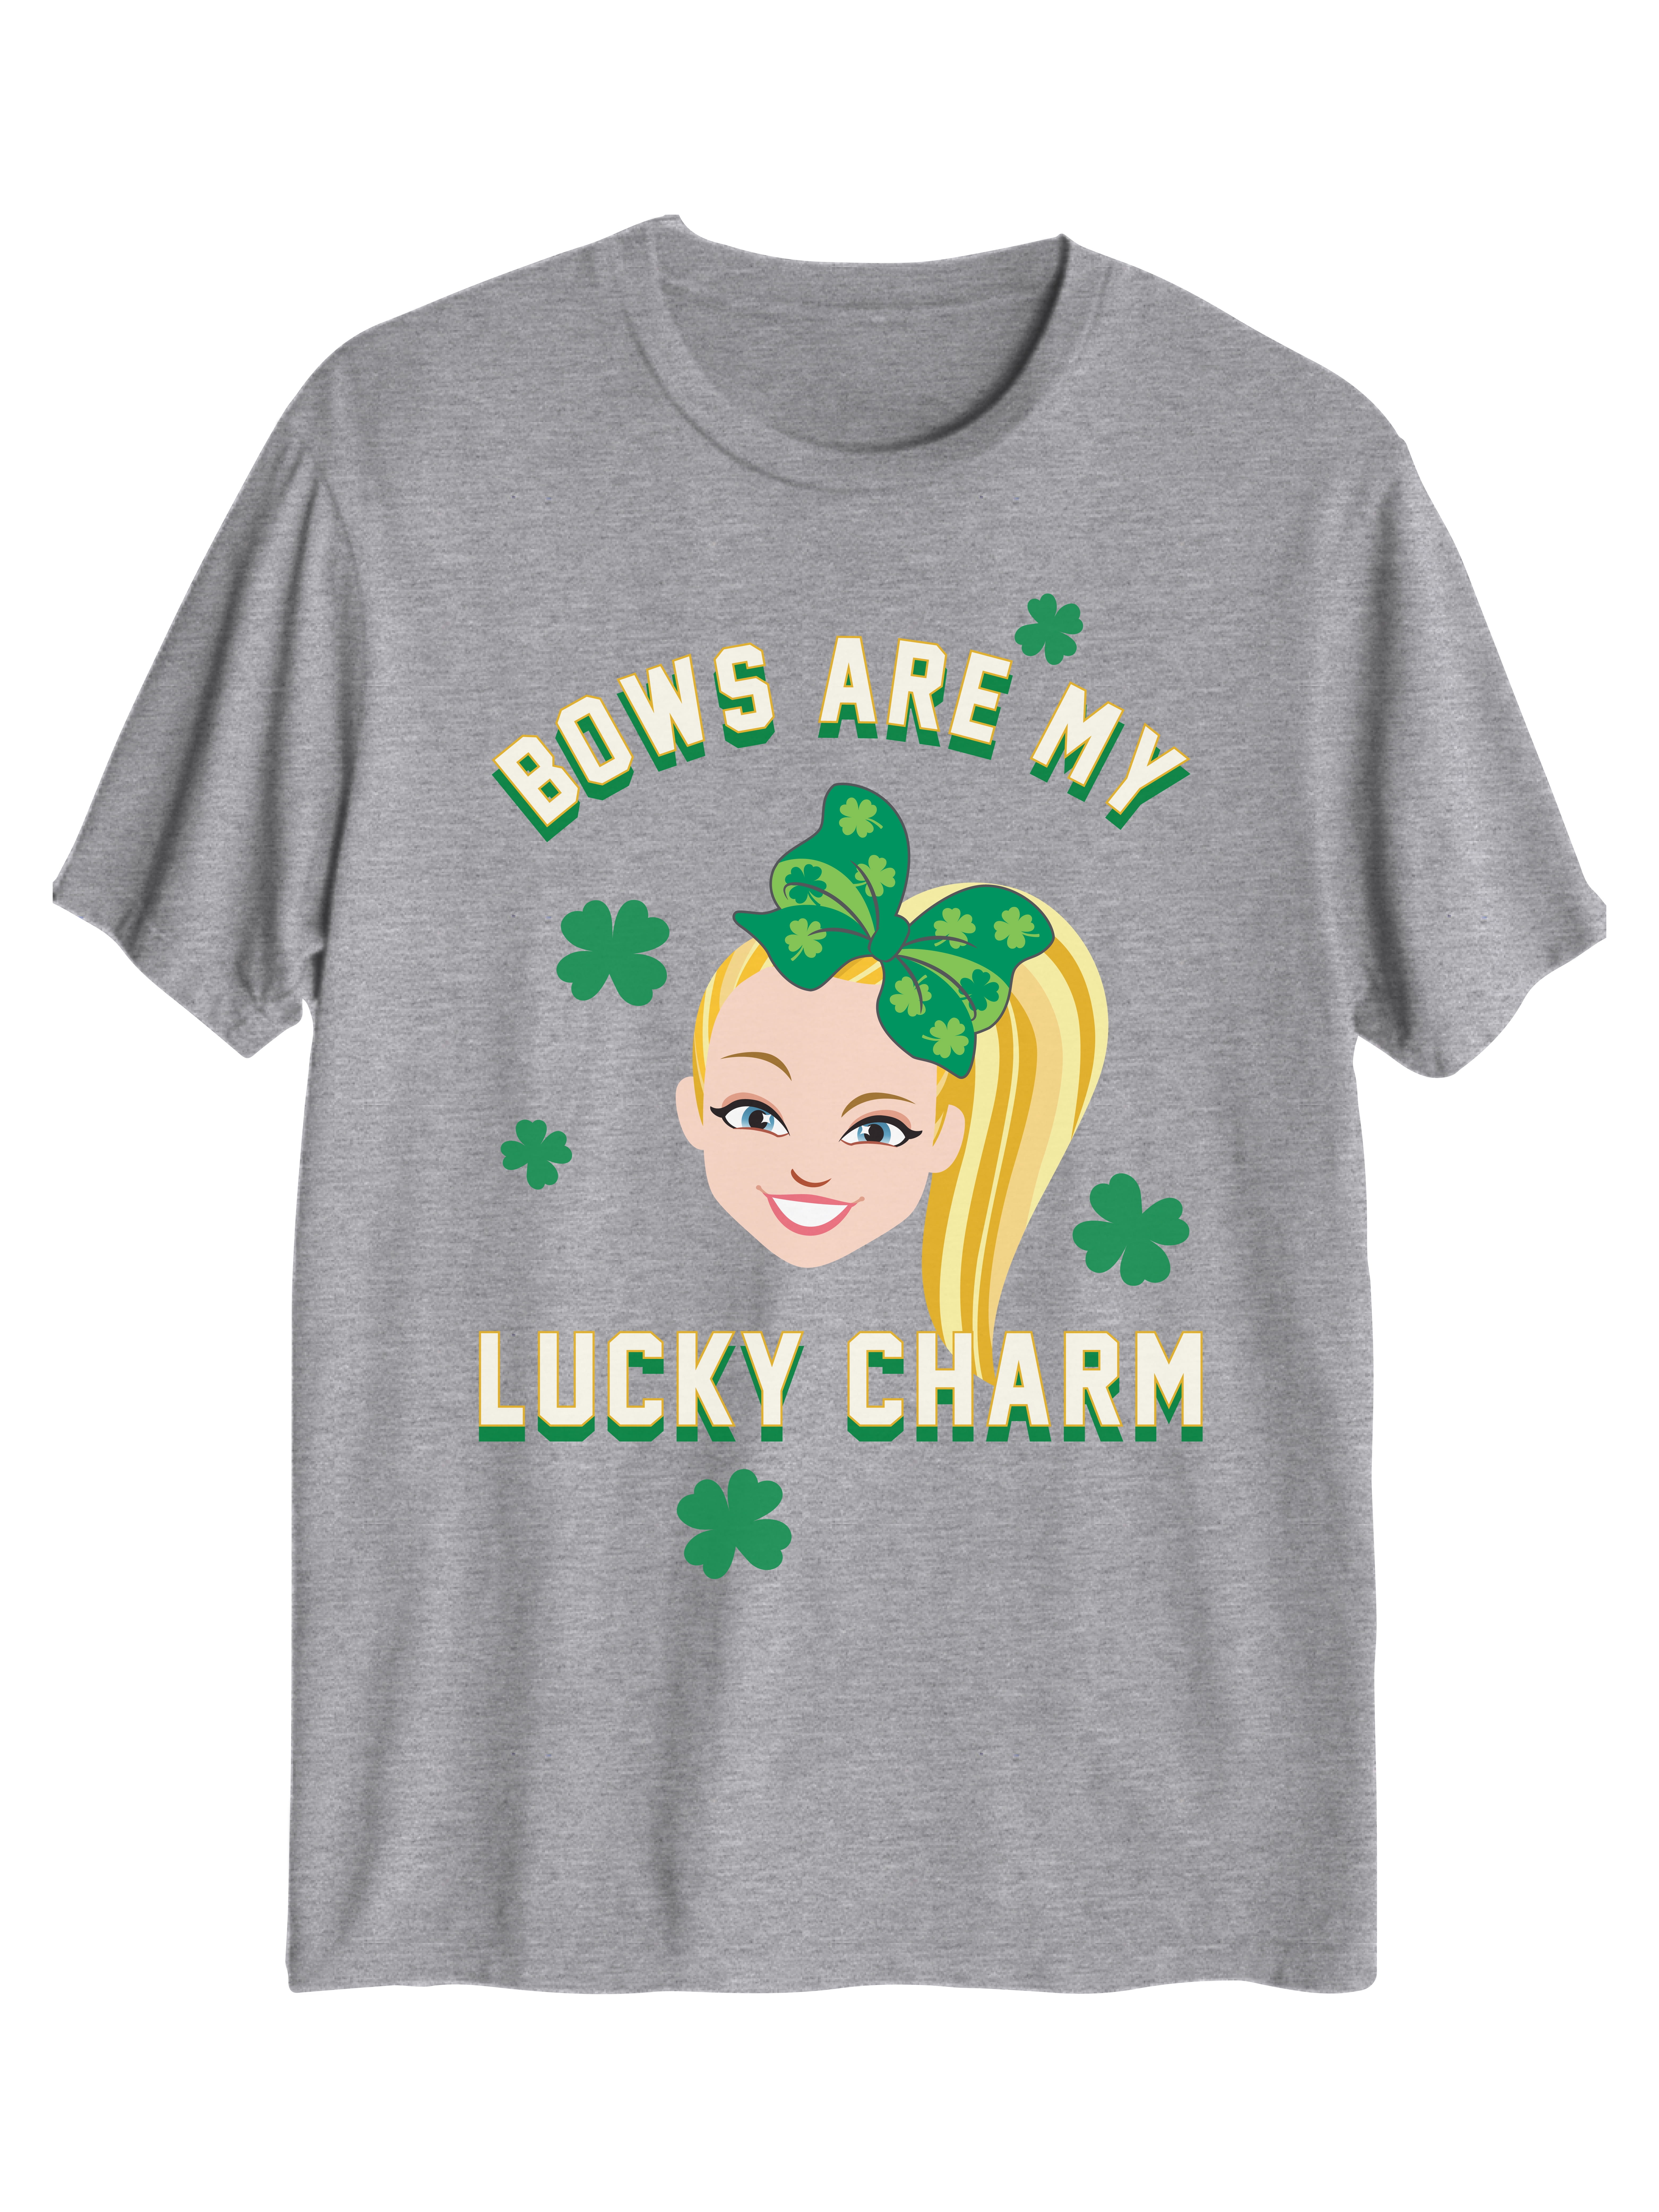 Boys St Patricks Day Shirt Patricks Day Kids Shirt Girls St Patricks Day Shirt Lucky Charm Shirt St St Patrick's Day Shirt